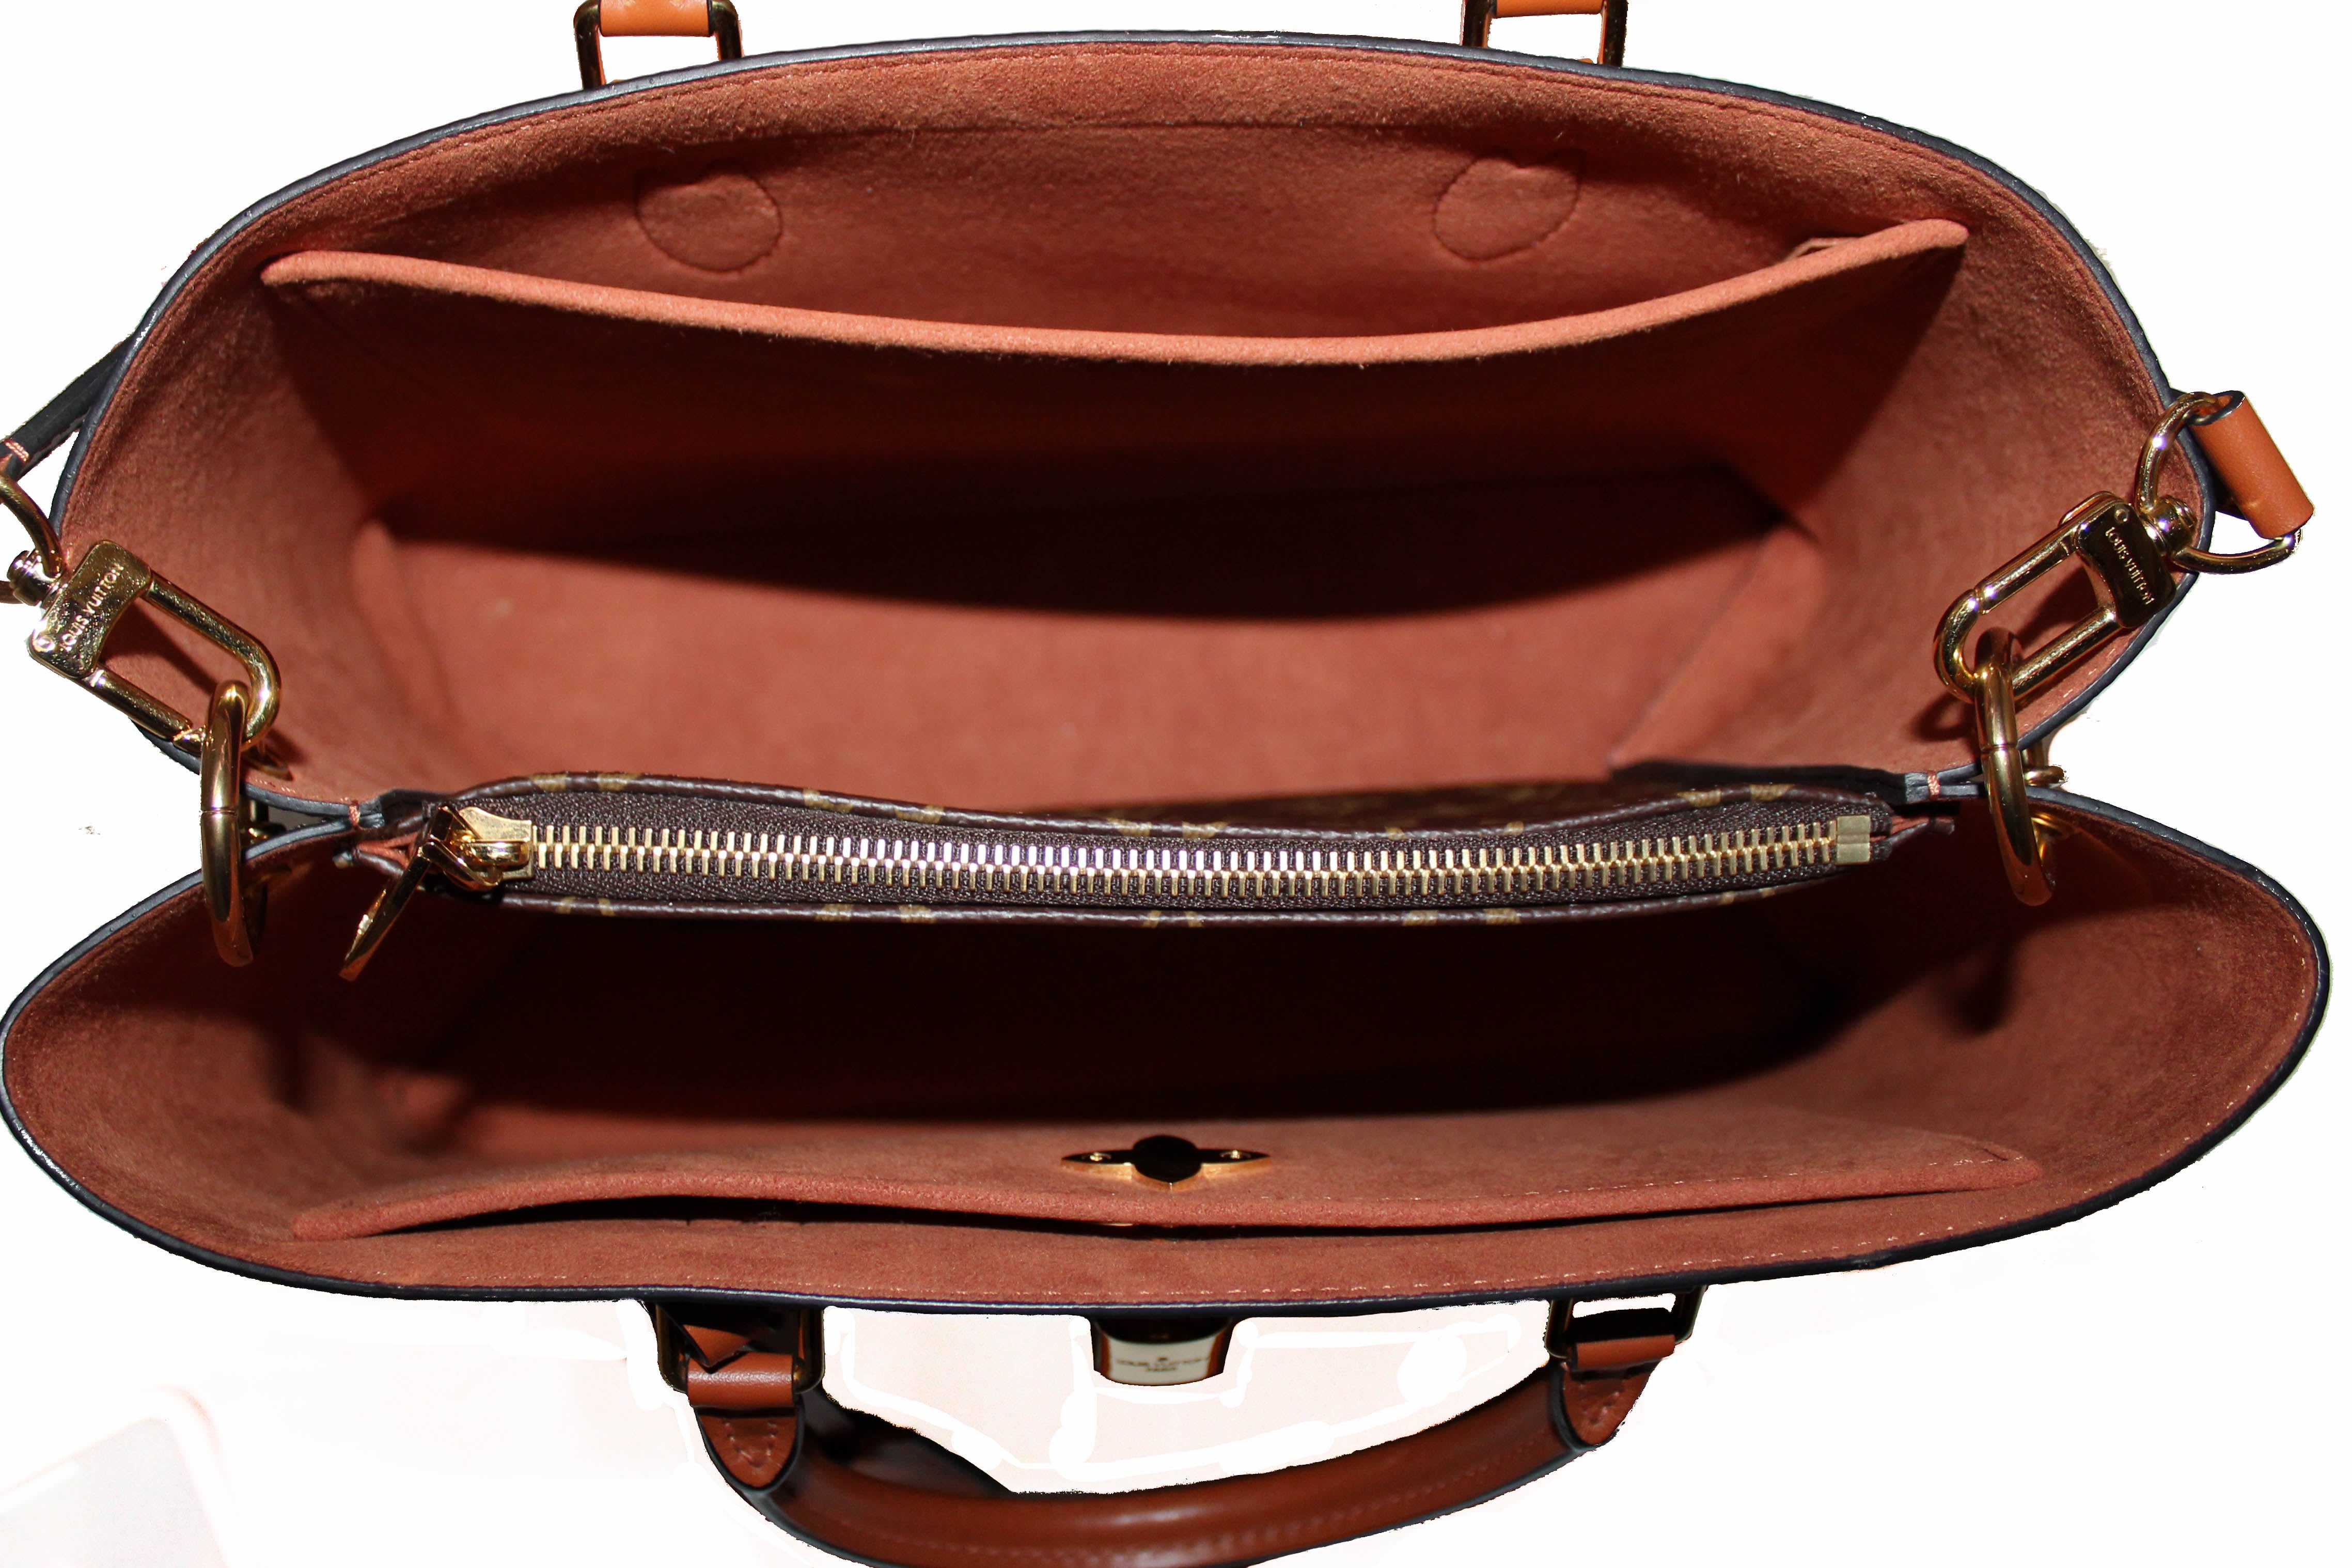 LOUIS VUITTON Auth Pink Noefull FO0173 Tote Shoulder Handbag Bag FLORAL  FLower